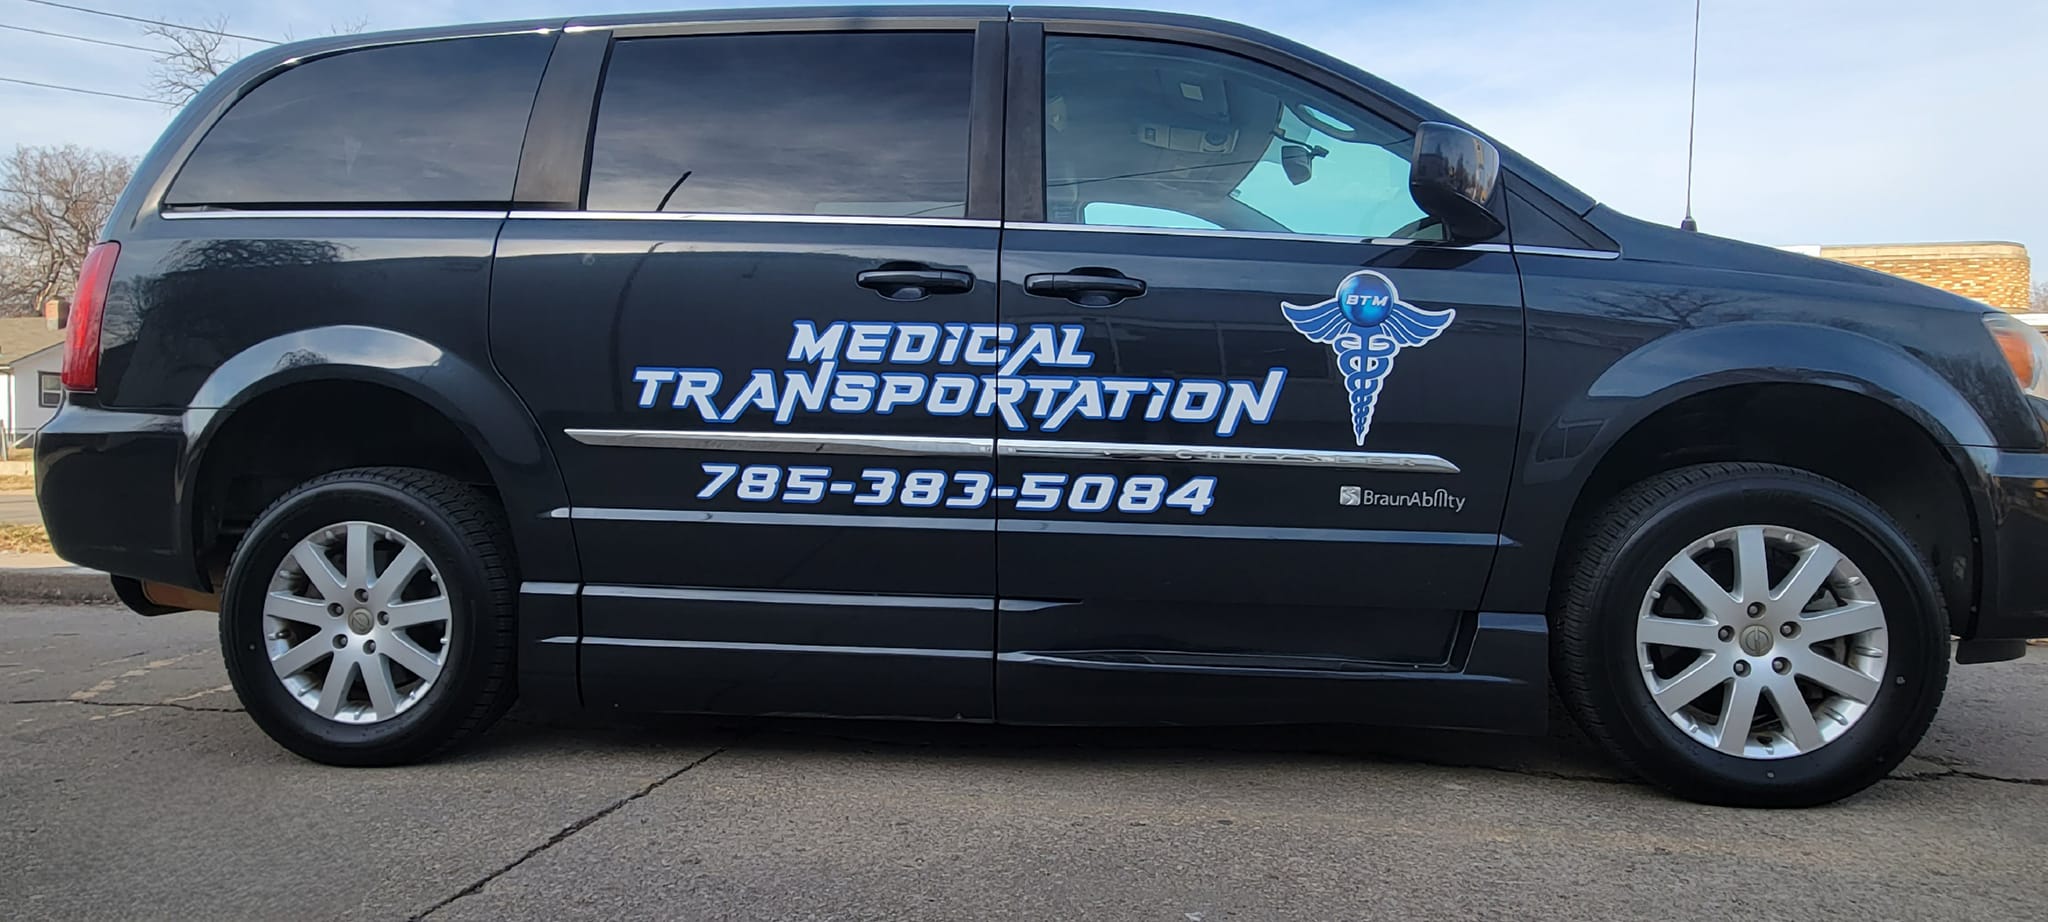 BTM Medical Transportation